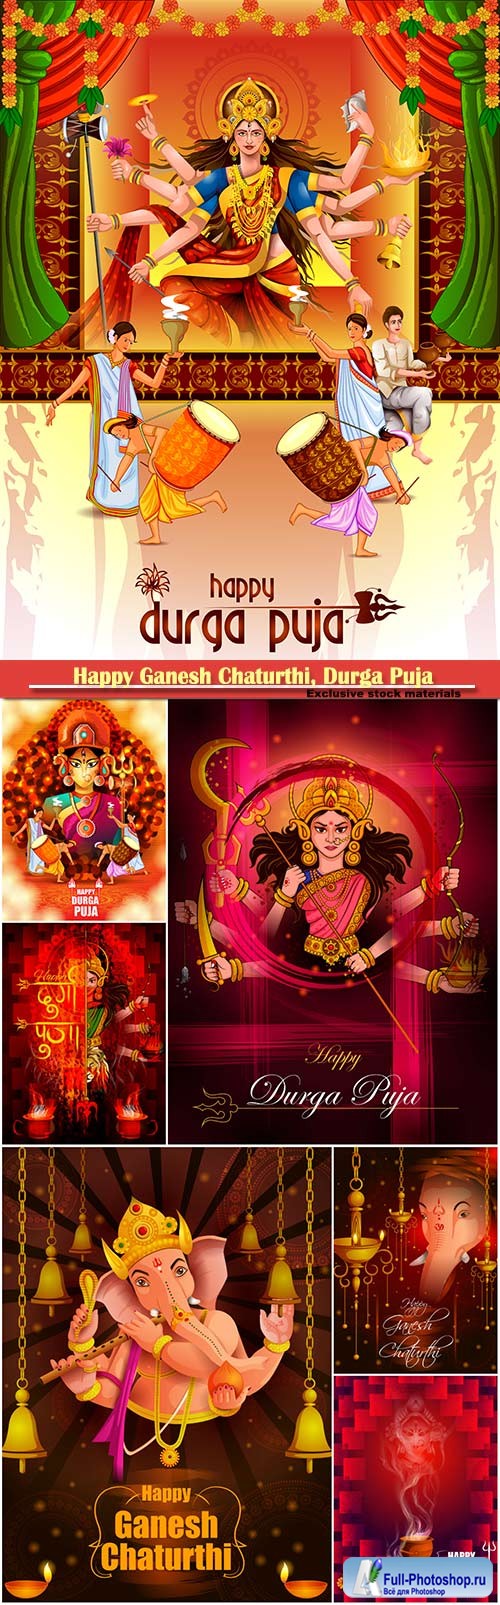 Happy Ganesh Chaturthi, Durga Puja vector illustration